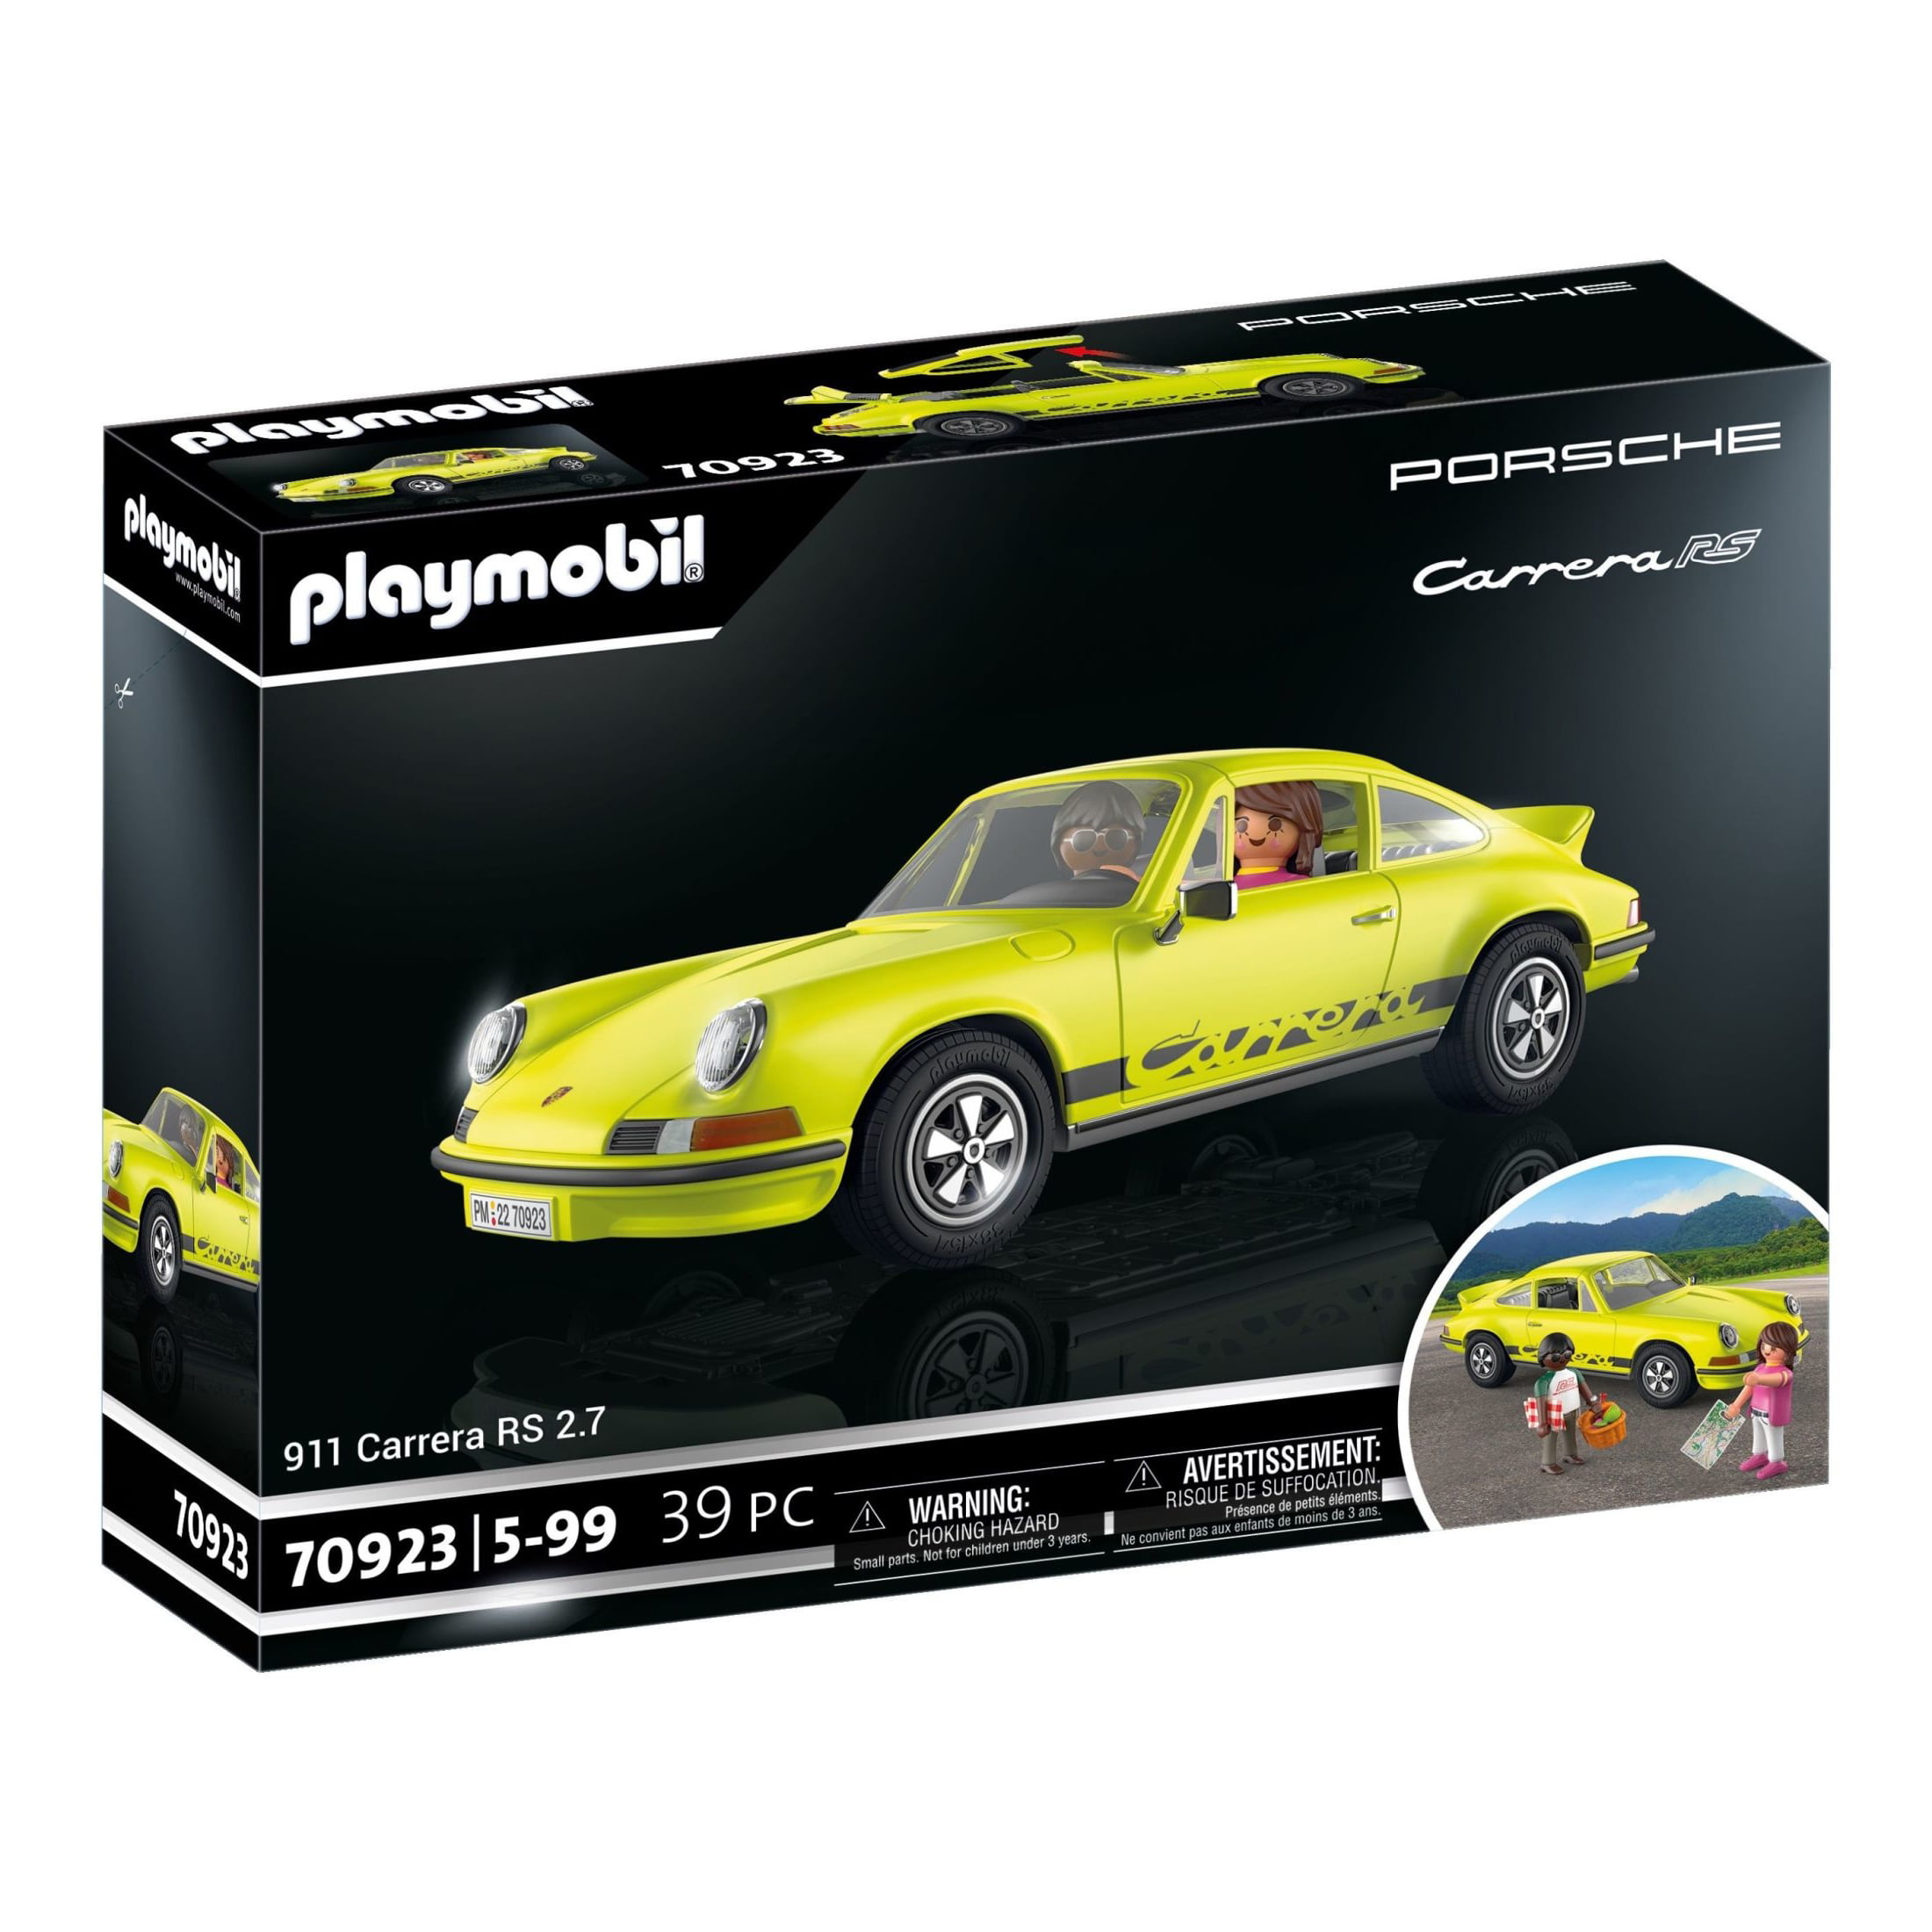 PLAYMOBIL - PORSCHE - 911 CARRERA RS 2.7